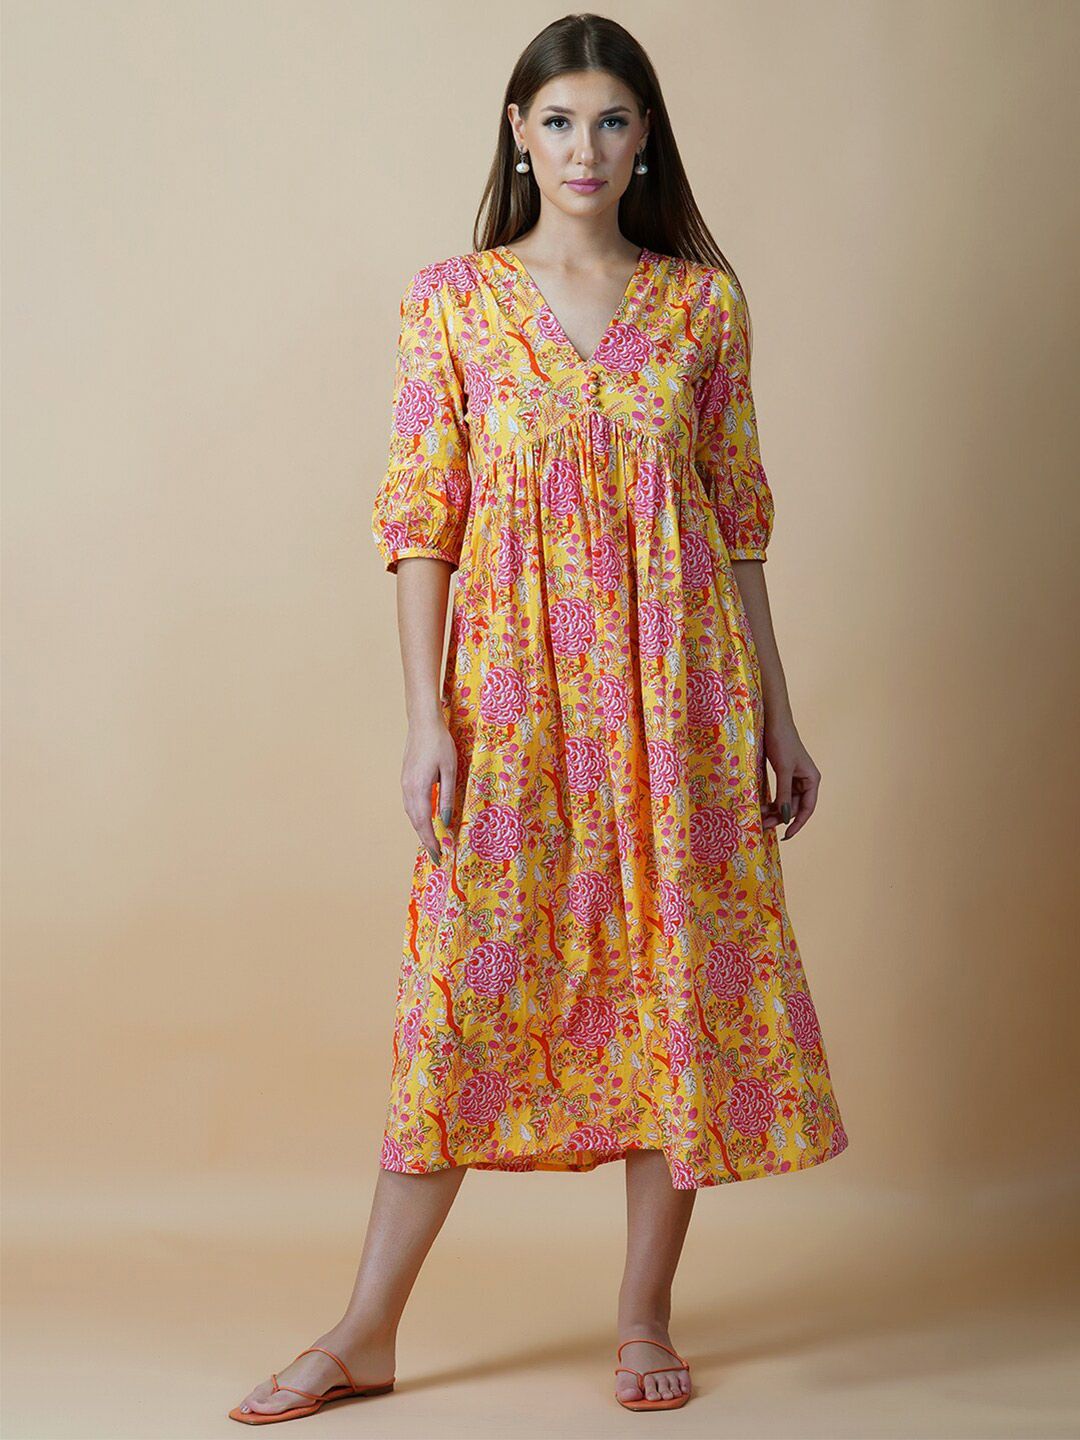 Twilldor Yellow Floral Ethnic Cotton  A-Line Midi Dress Price in India